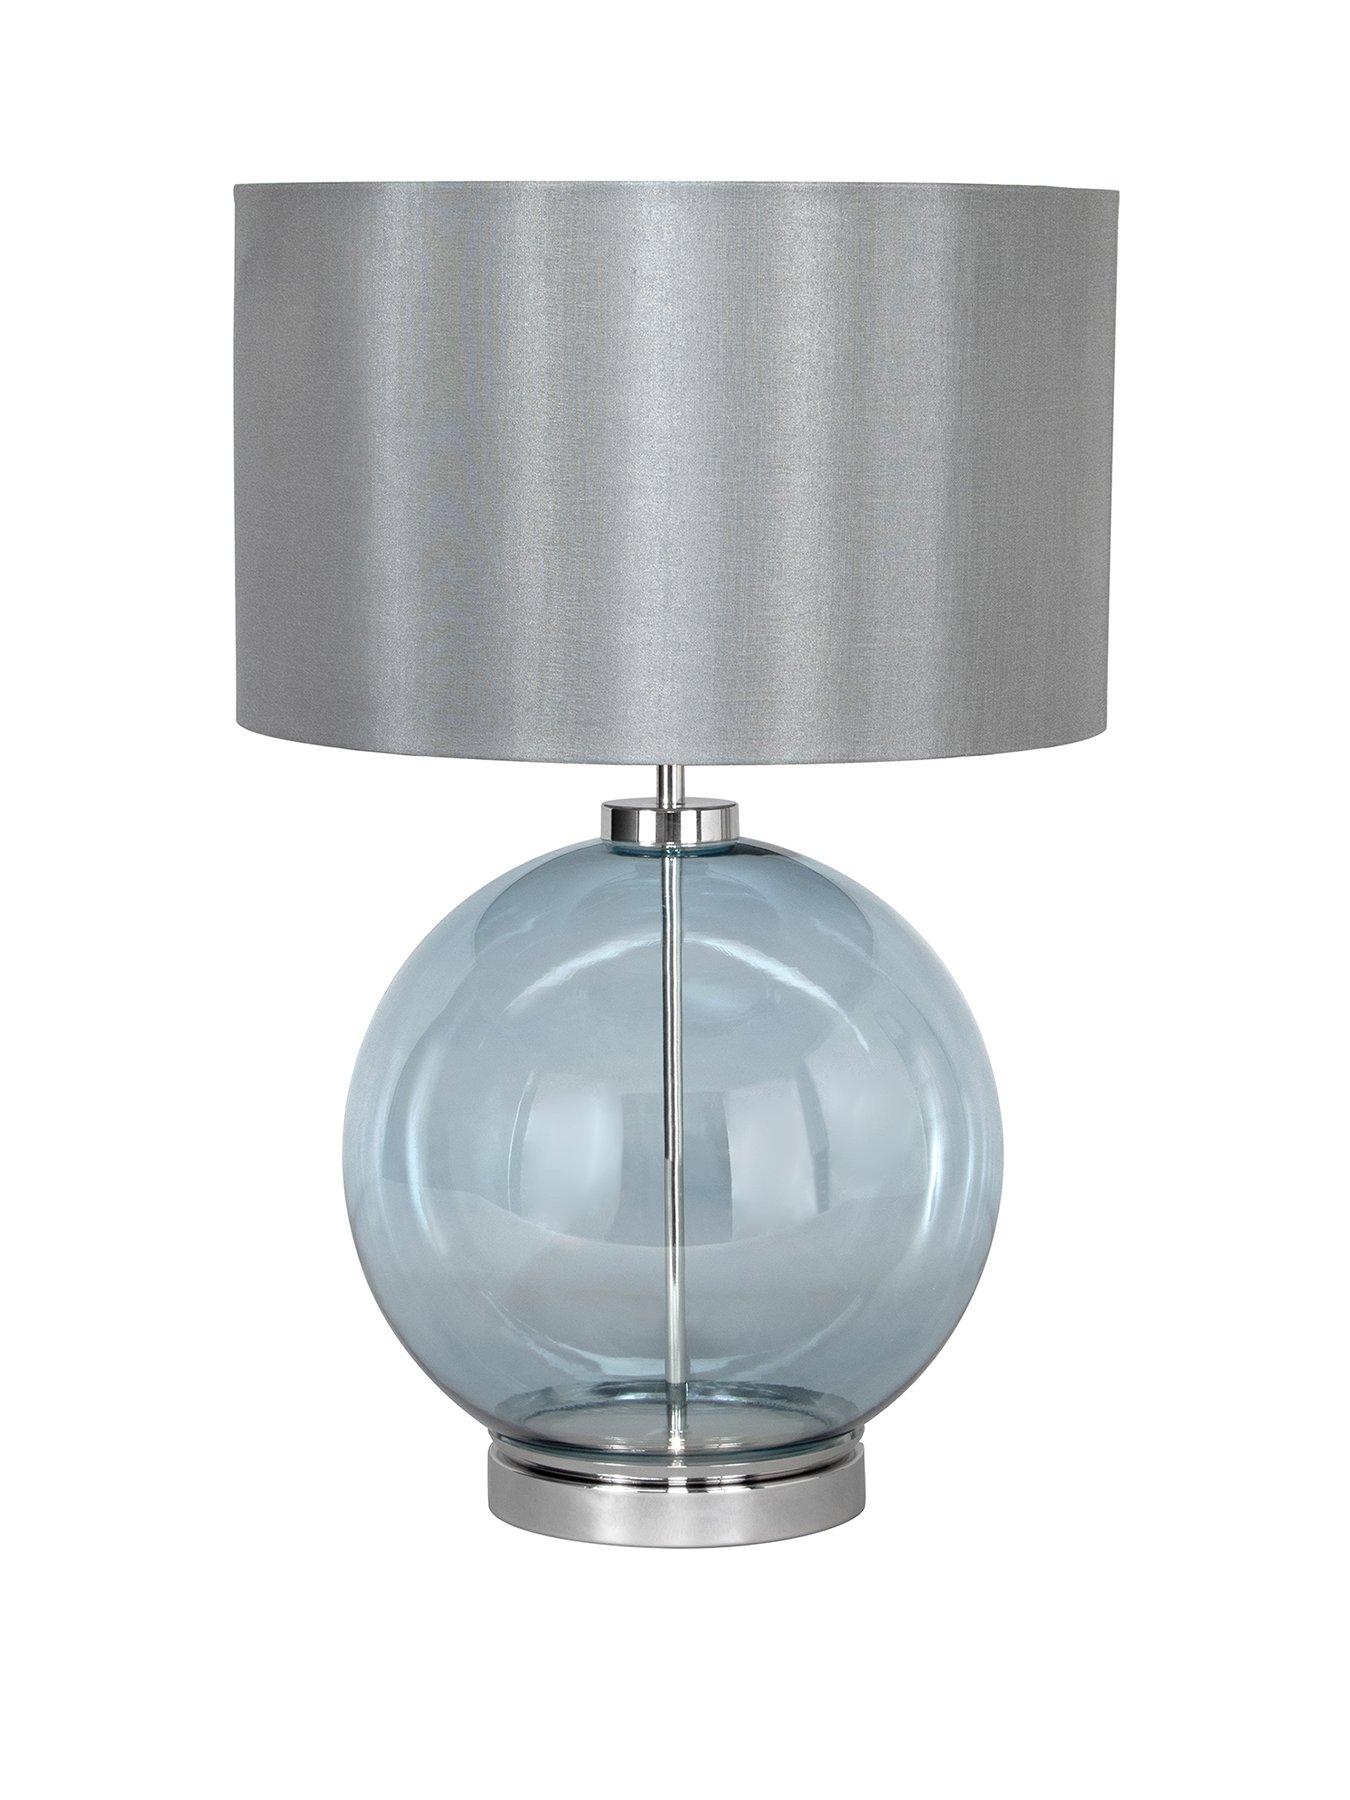 Bhs Metro Ball Table Lamp Blue/Nickel